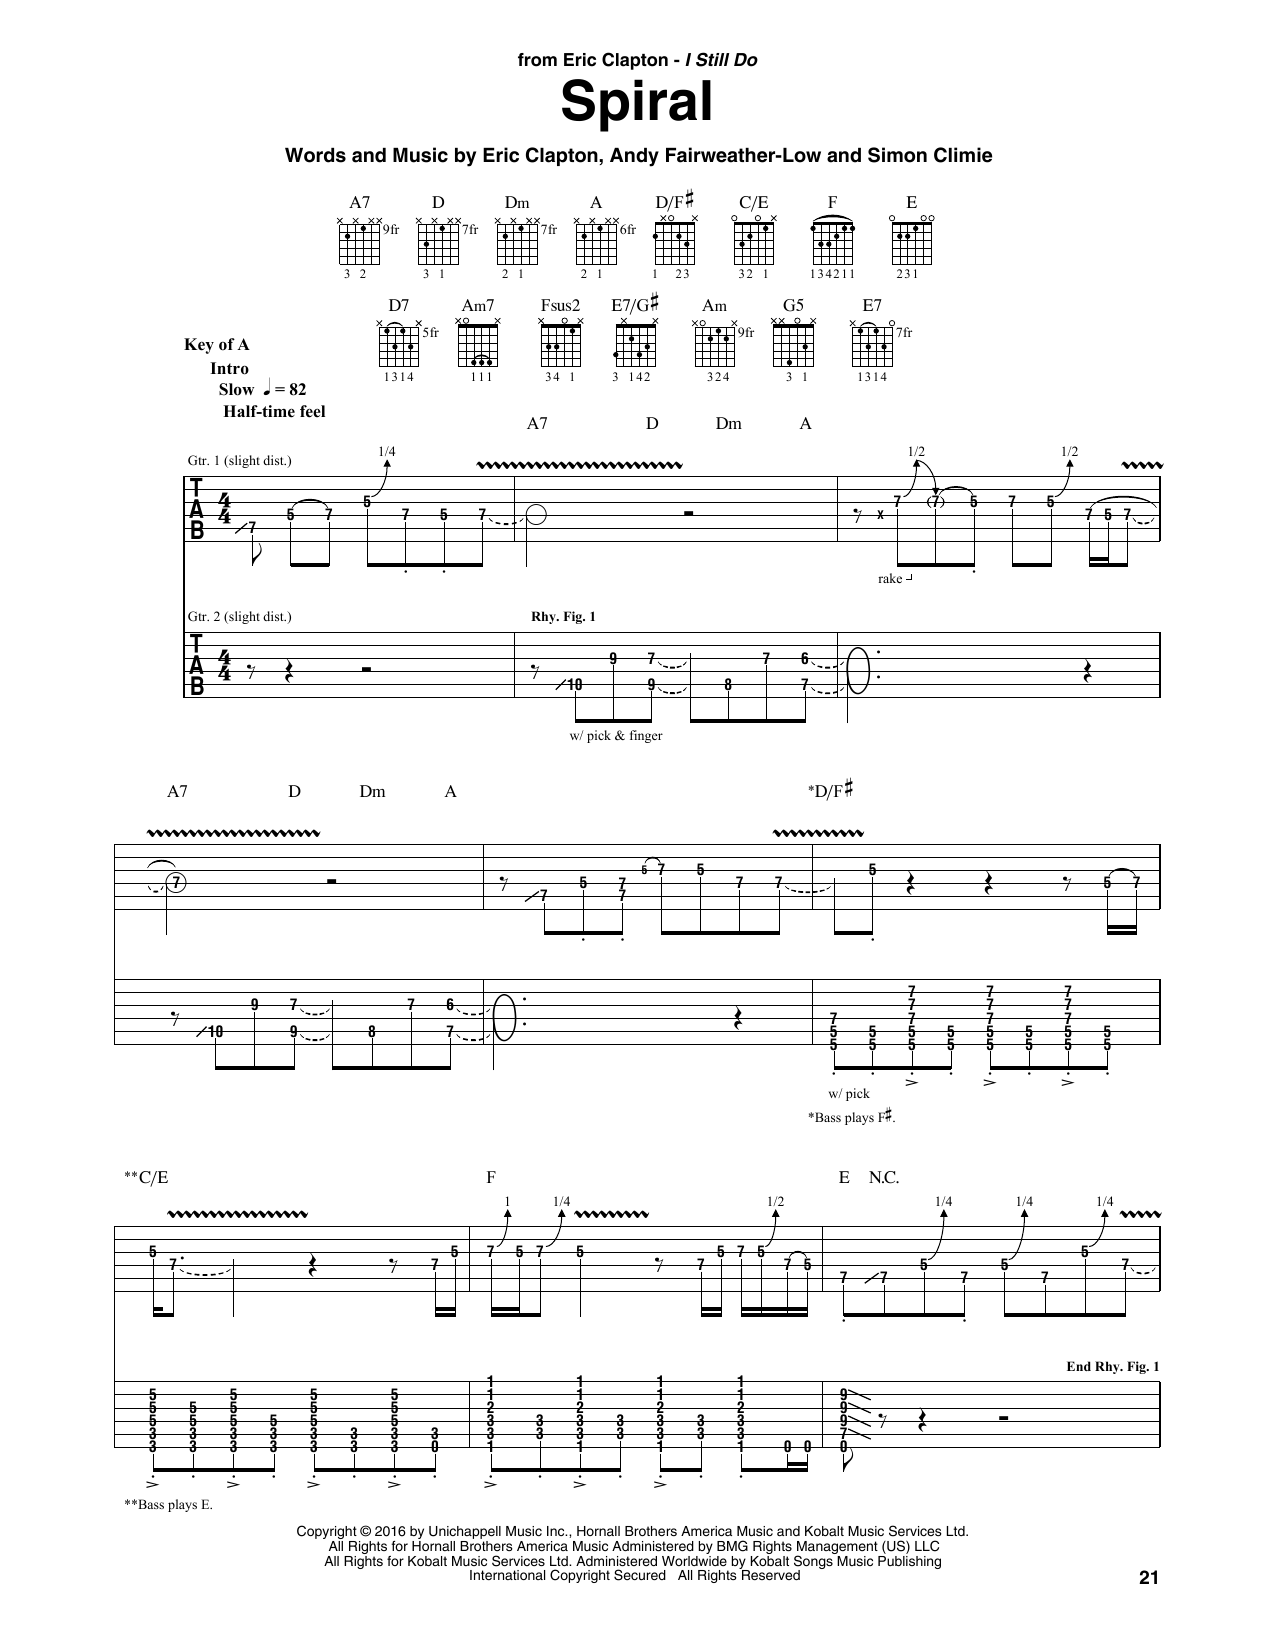 Eric Clapton Spiral Sheet Music Notes & Chords for Guitar Tab - Download or Print PDF